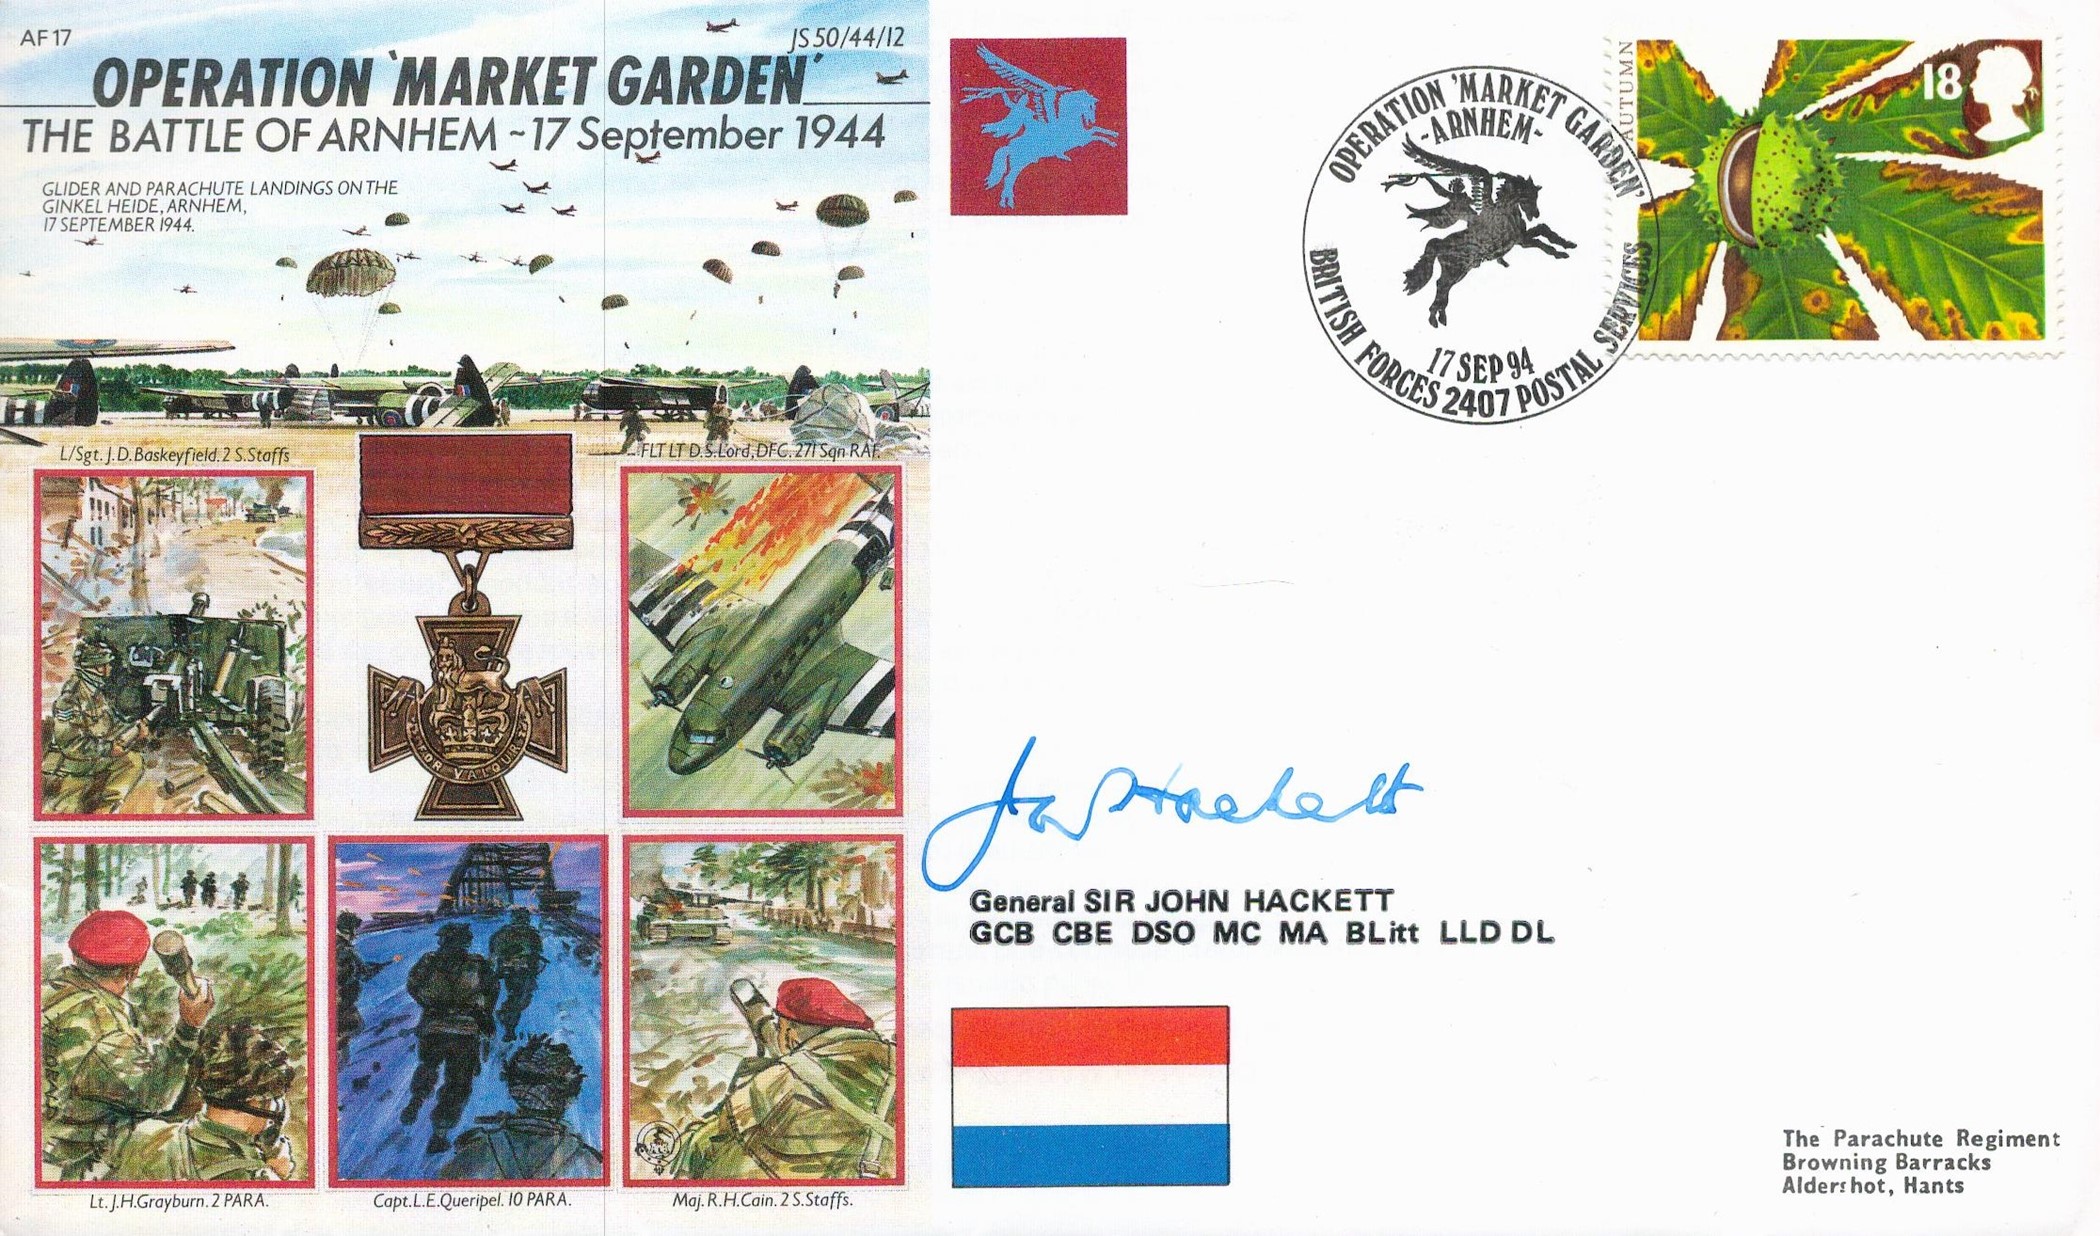 WW2. Operation Market garden, the Battle Of Arnhem on 17th September 1944 FDC (JS 50/44/12) signed